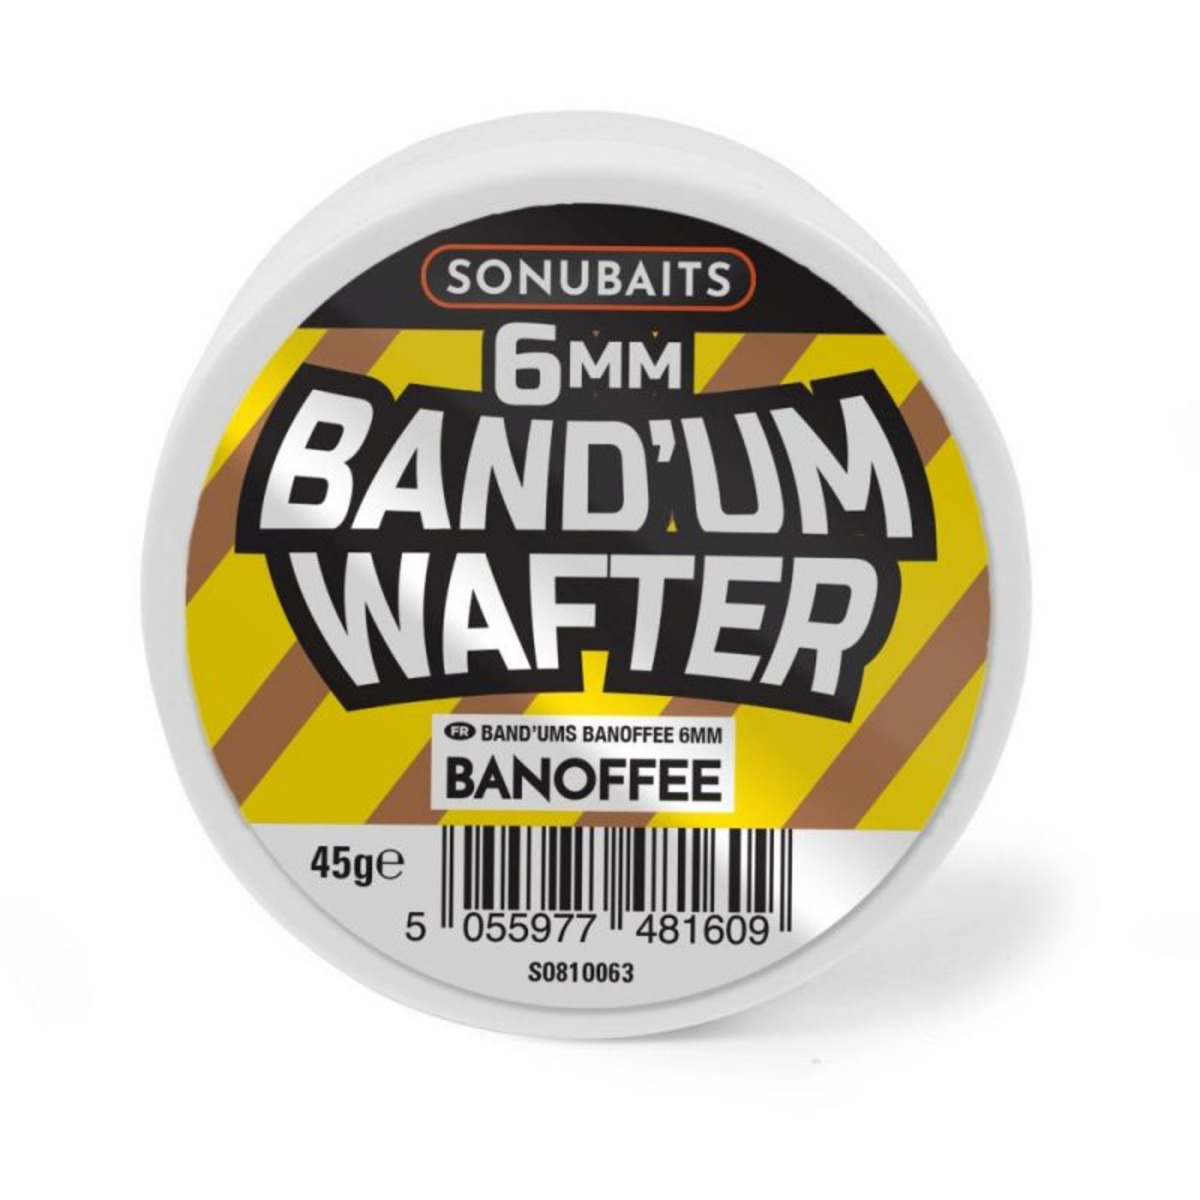 Sonubaits Band’um Wafters - 6 mm - Banoffee